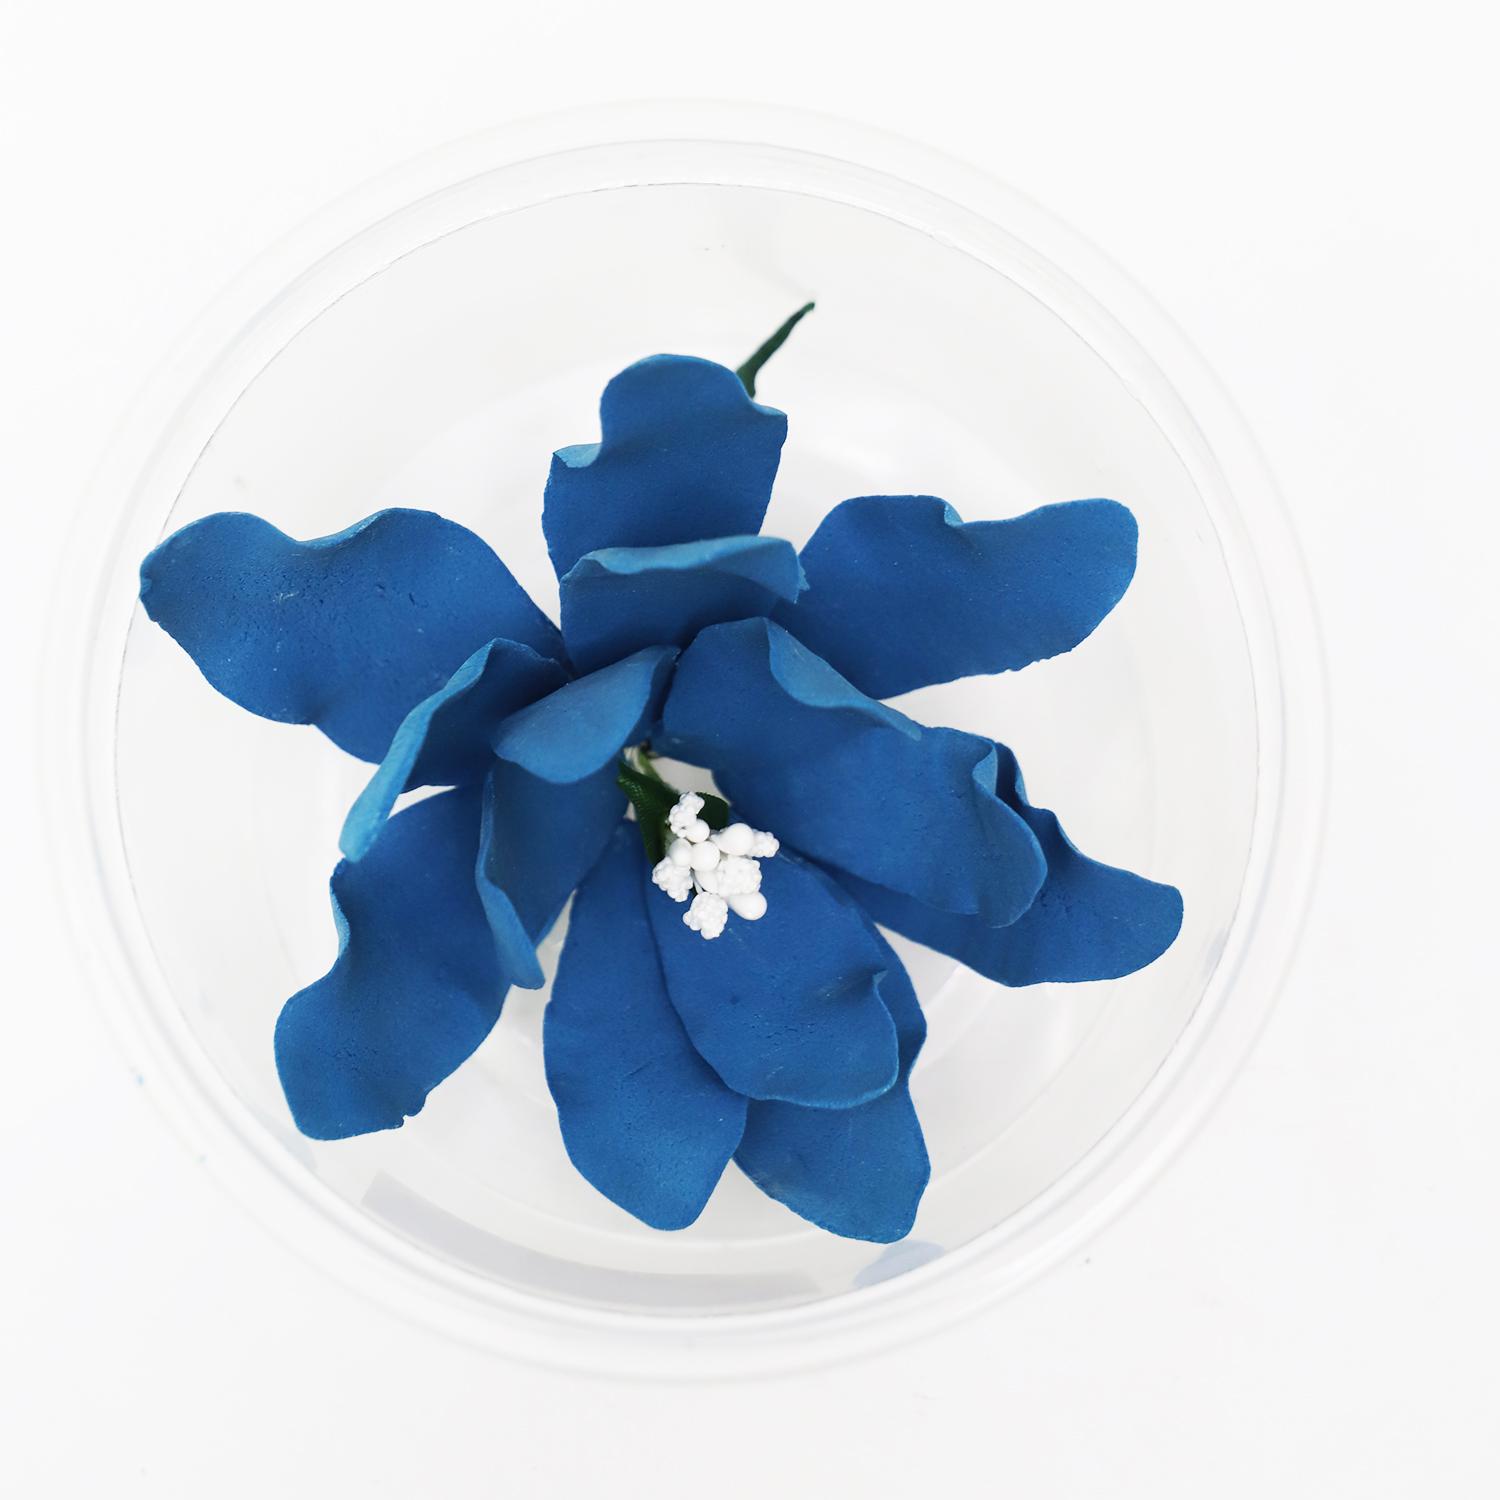 SUPER CAKES MAGNOLIA FLOWER ROYAL BLUE